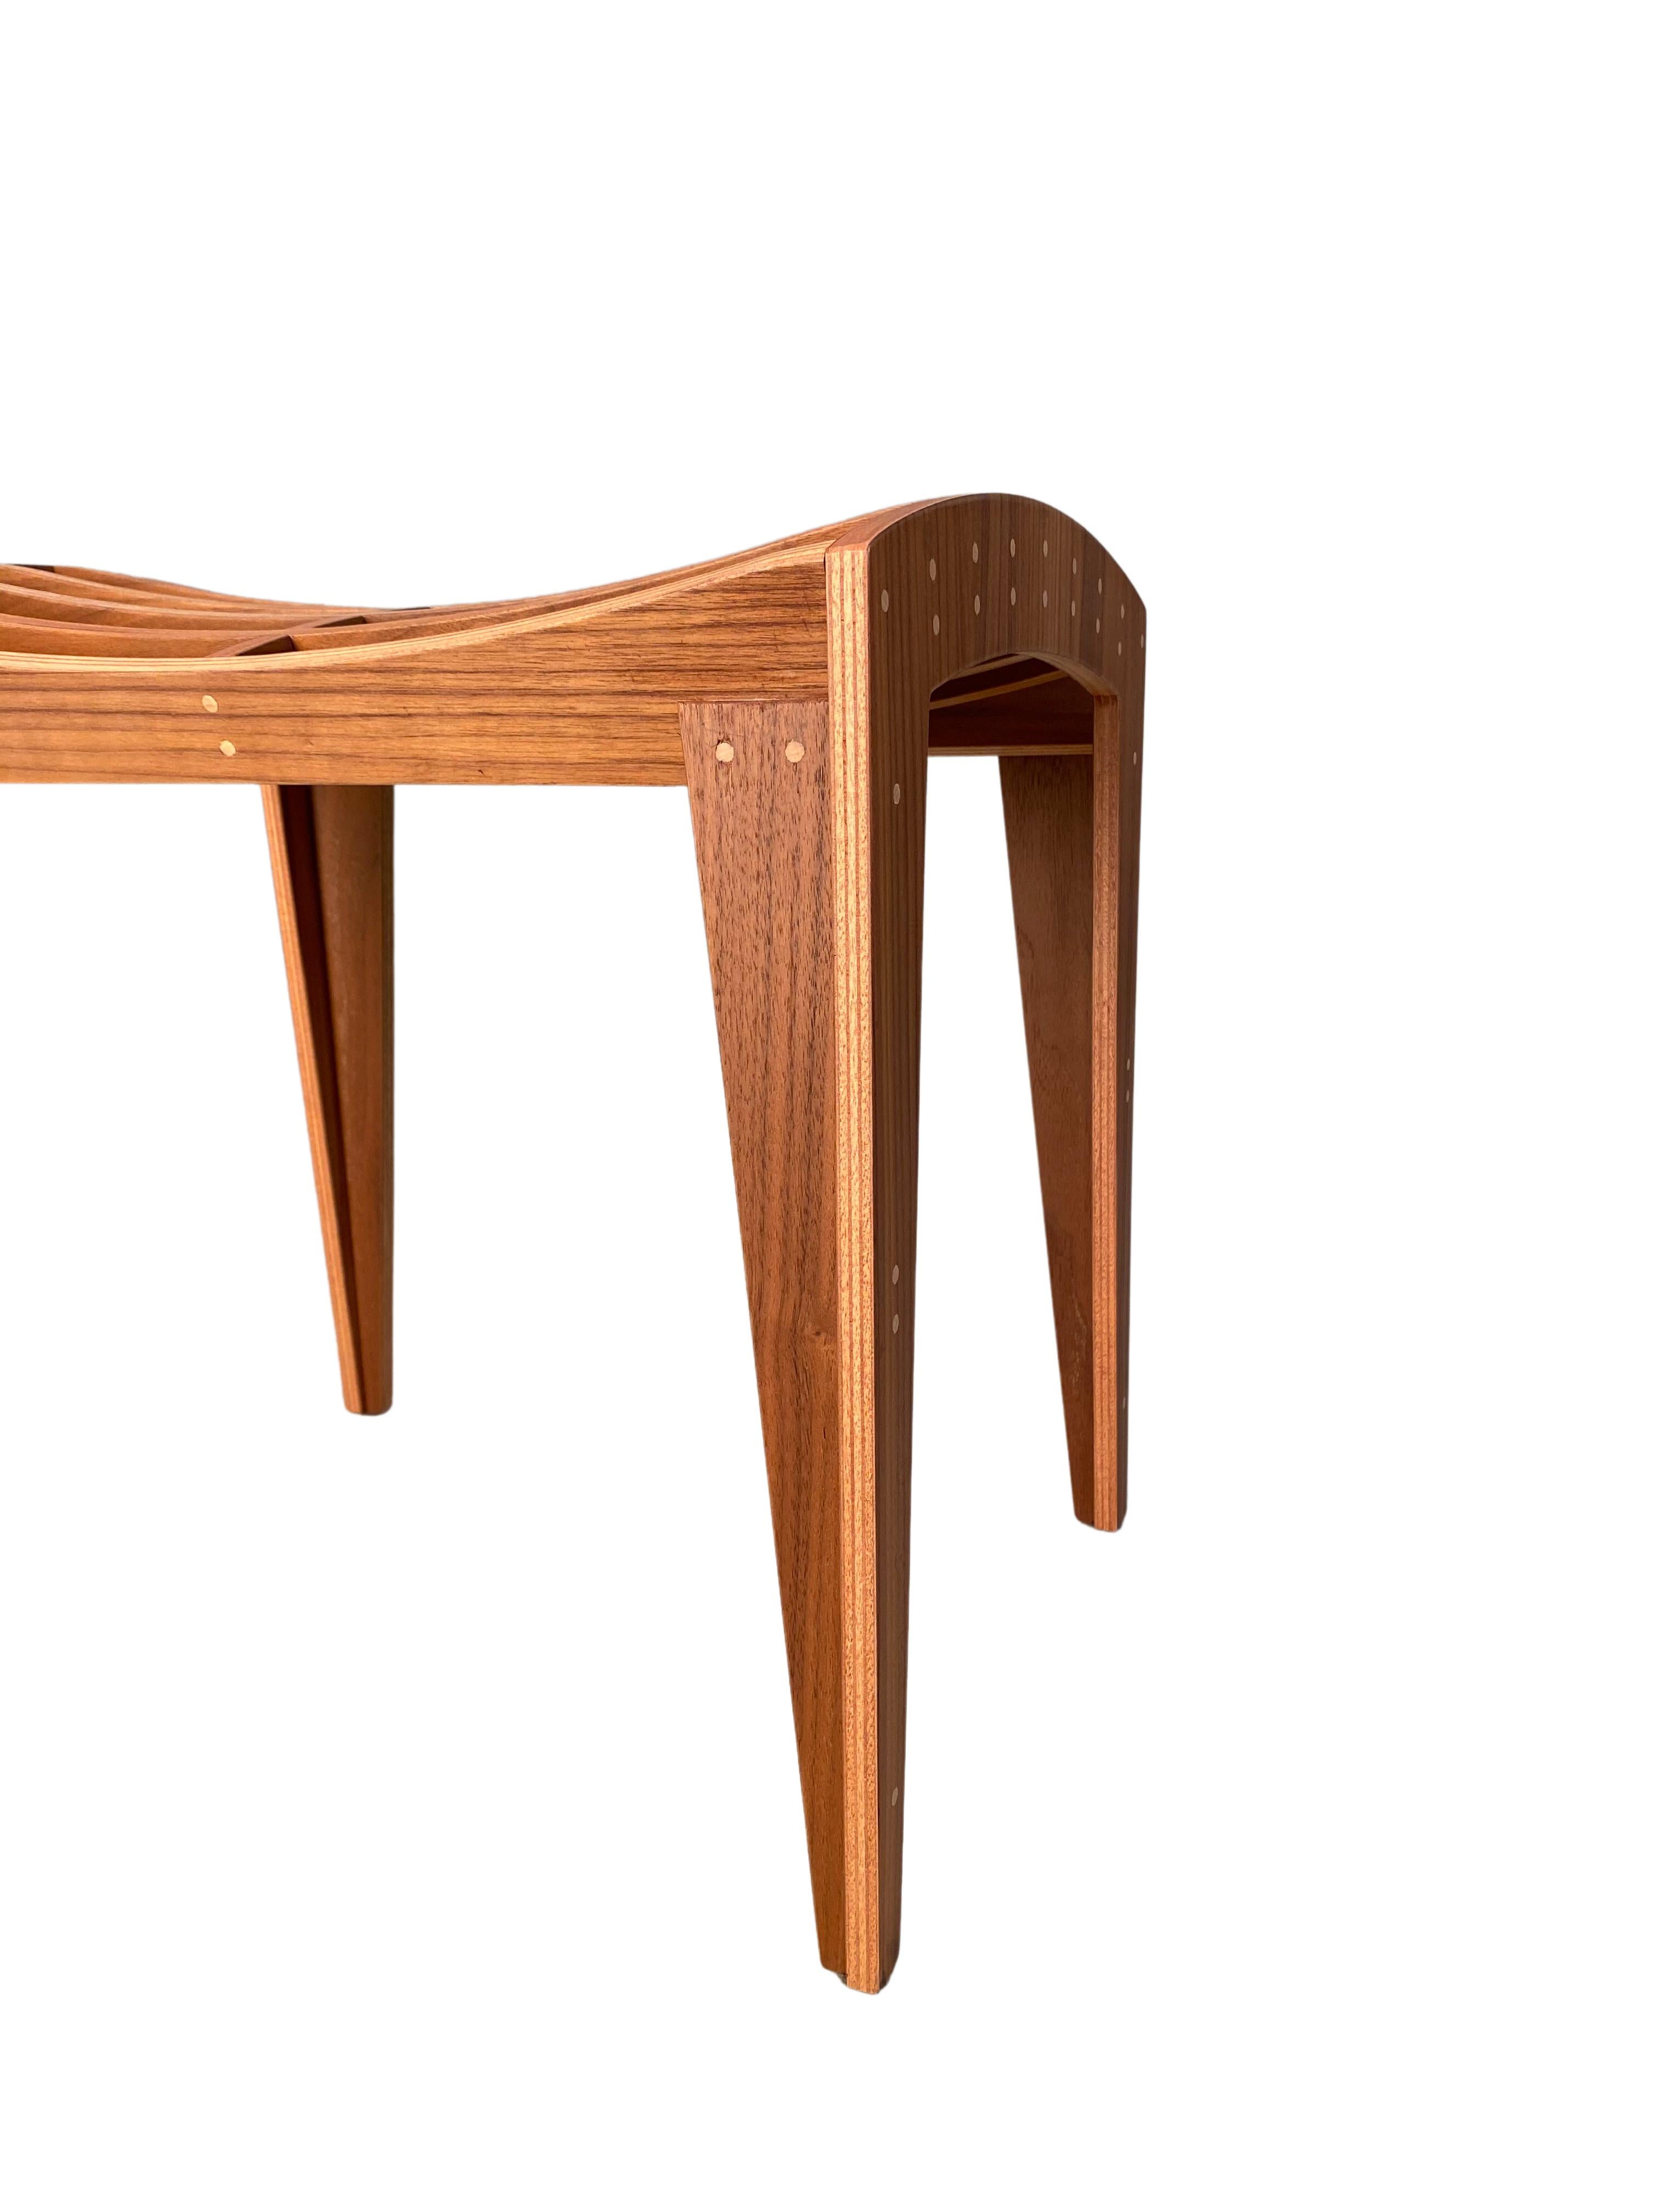 Zero, Stool in Walnut Wood Designed by Franco Poli for Morelato 6